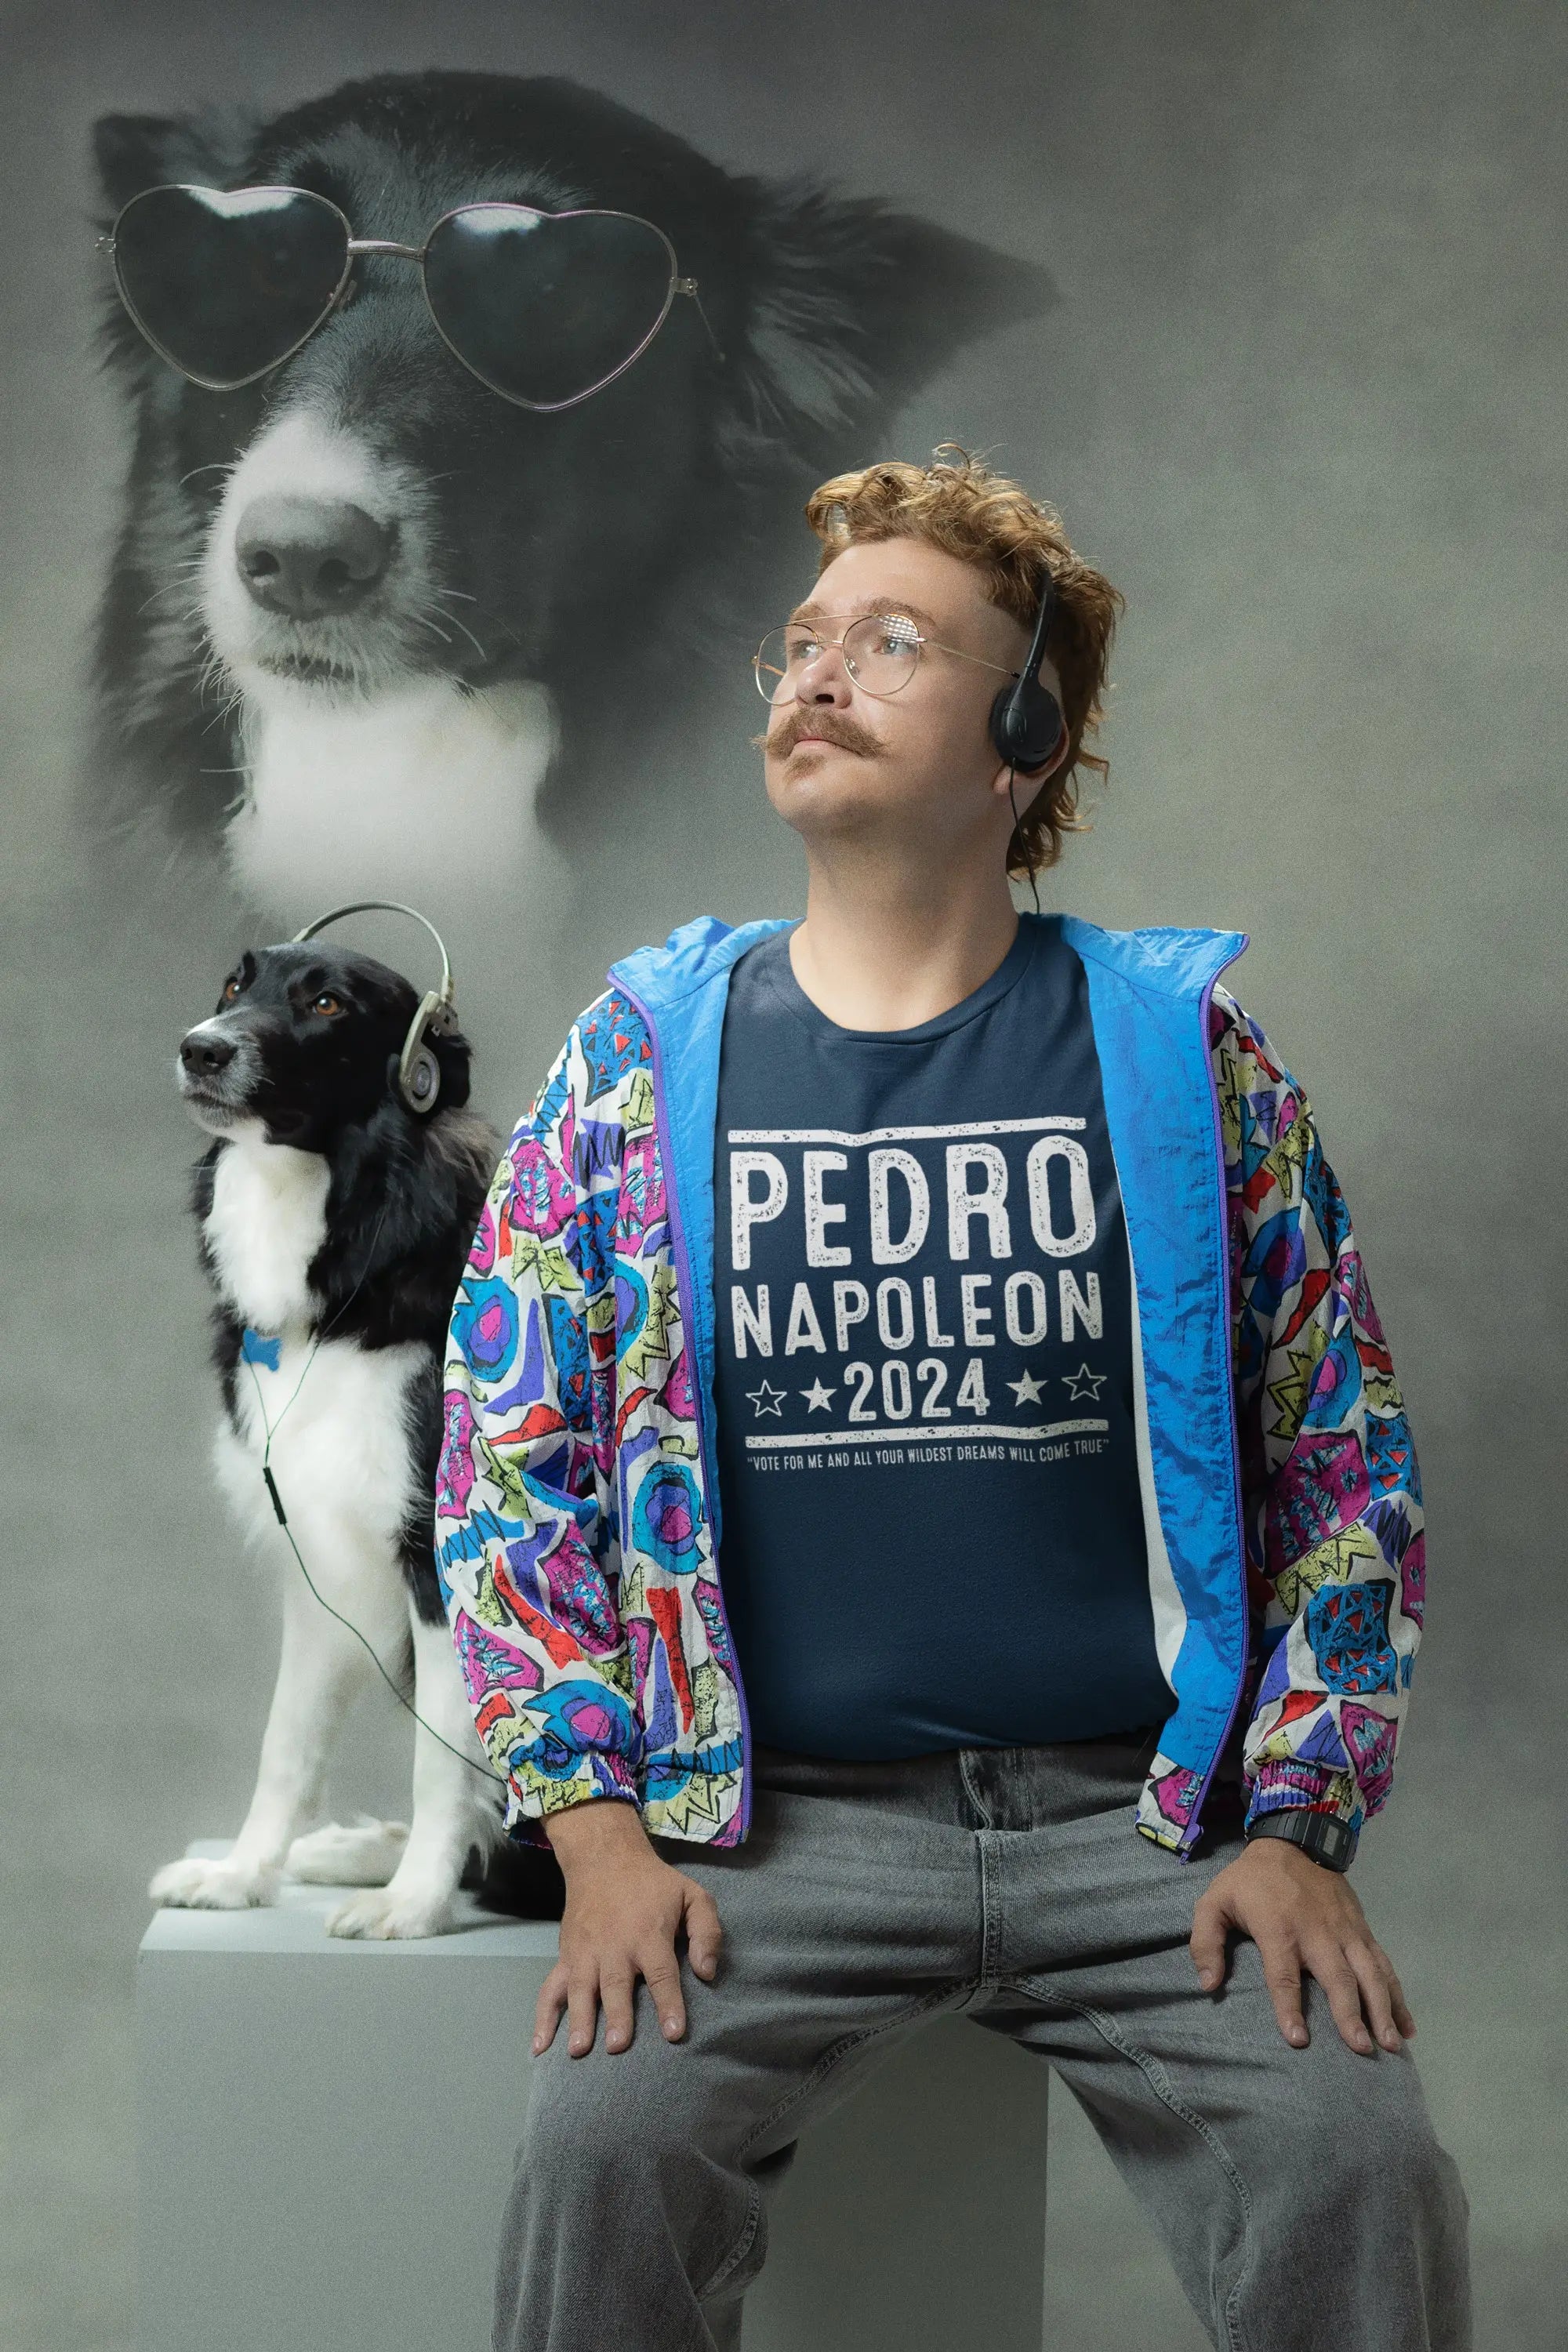 Pedro Napoleon 2024 Election Tshirt - Donkey Tees